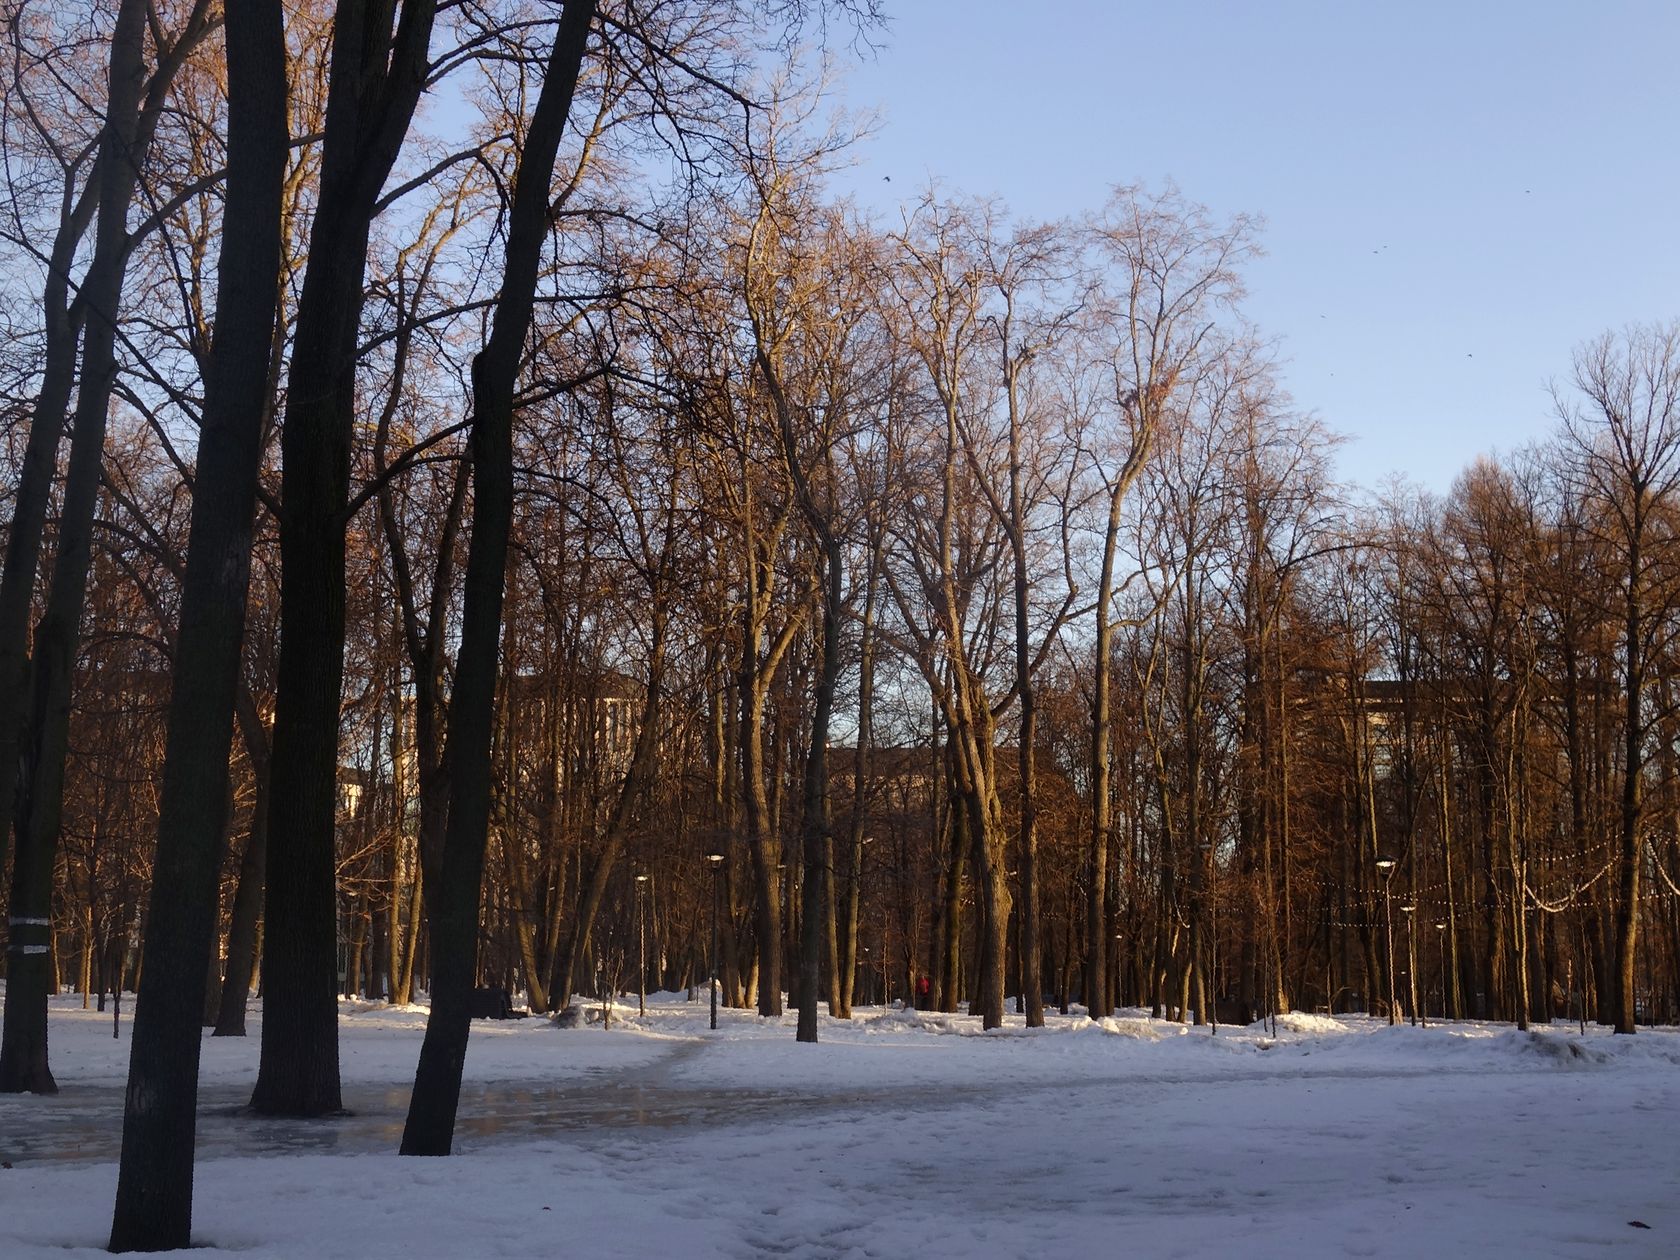 Парк "Динамо", изображение ландшафта.